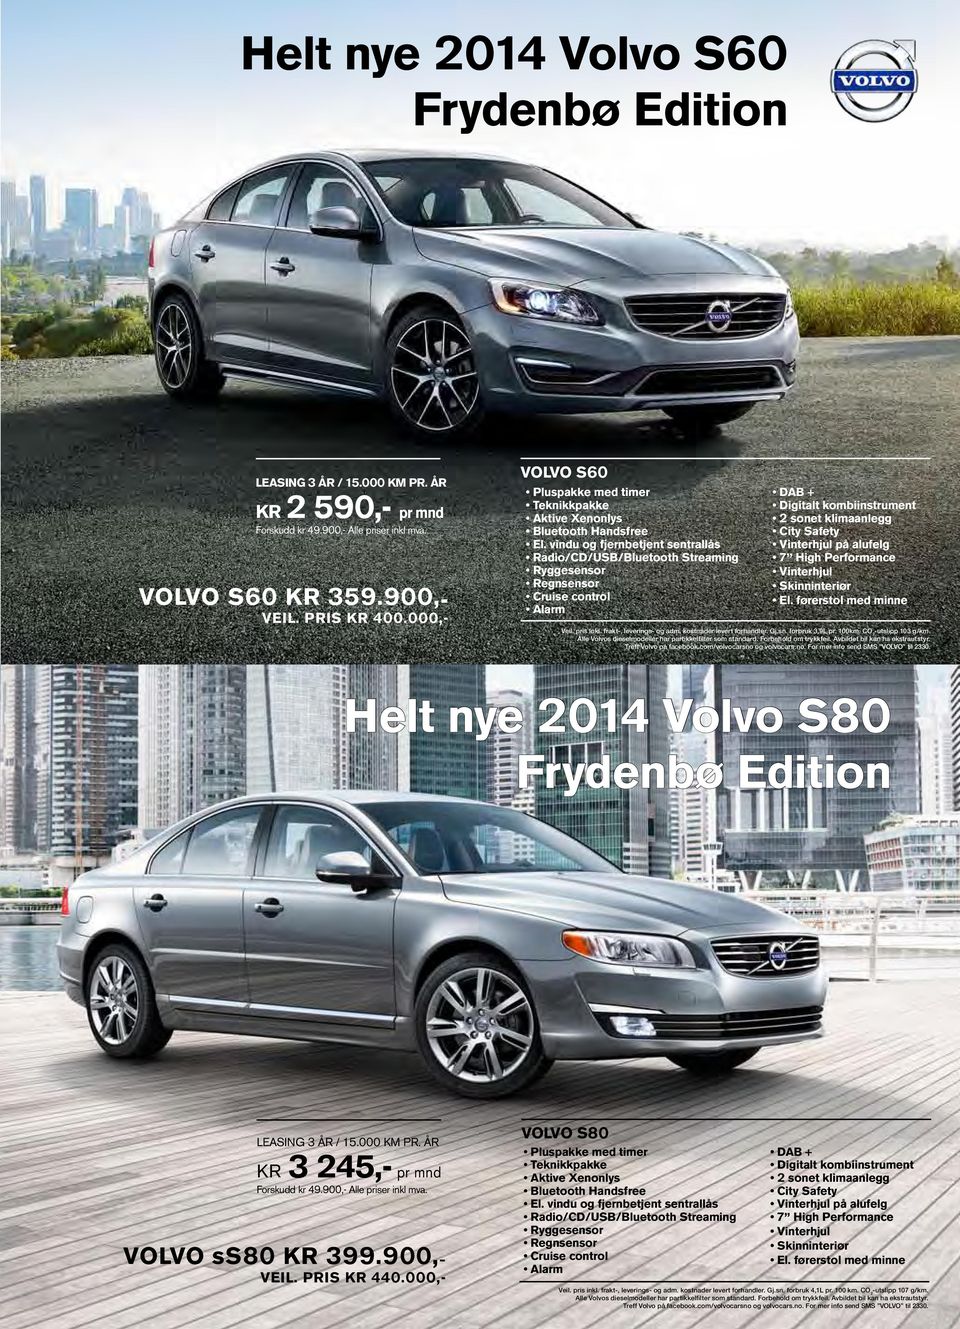 Helt nye 2014 Volvo S80 3 245,- pr mnd Forskudd kr 49.900,- Alle priser inkl mva. VOLVO ss80 399.900,- VEIL. PRIS 440.000,- VOLVO S80 på alufelg El.